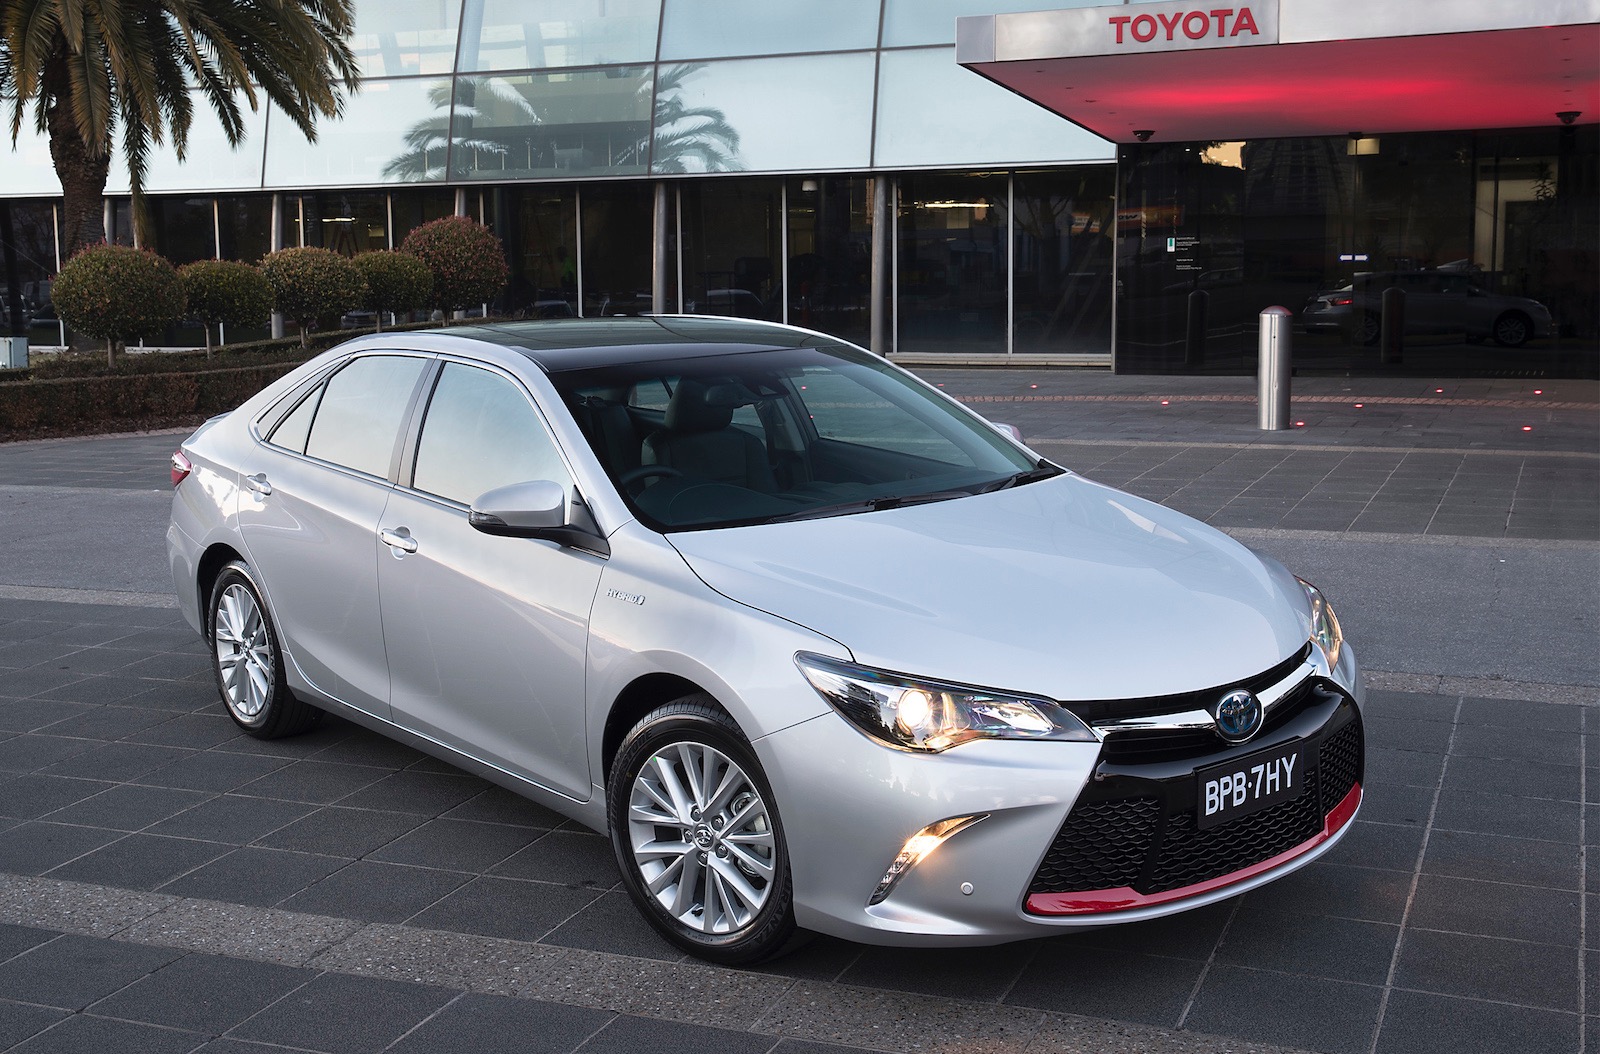 Toyota announces Commemorative Camry, celebrates Aussie production